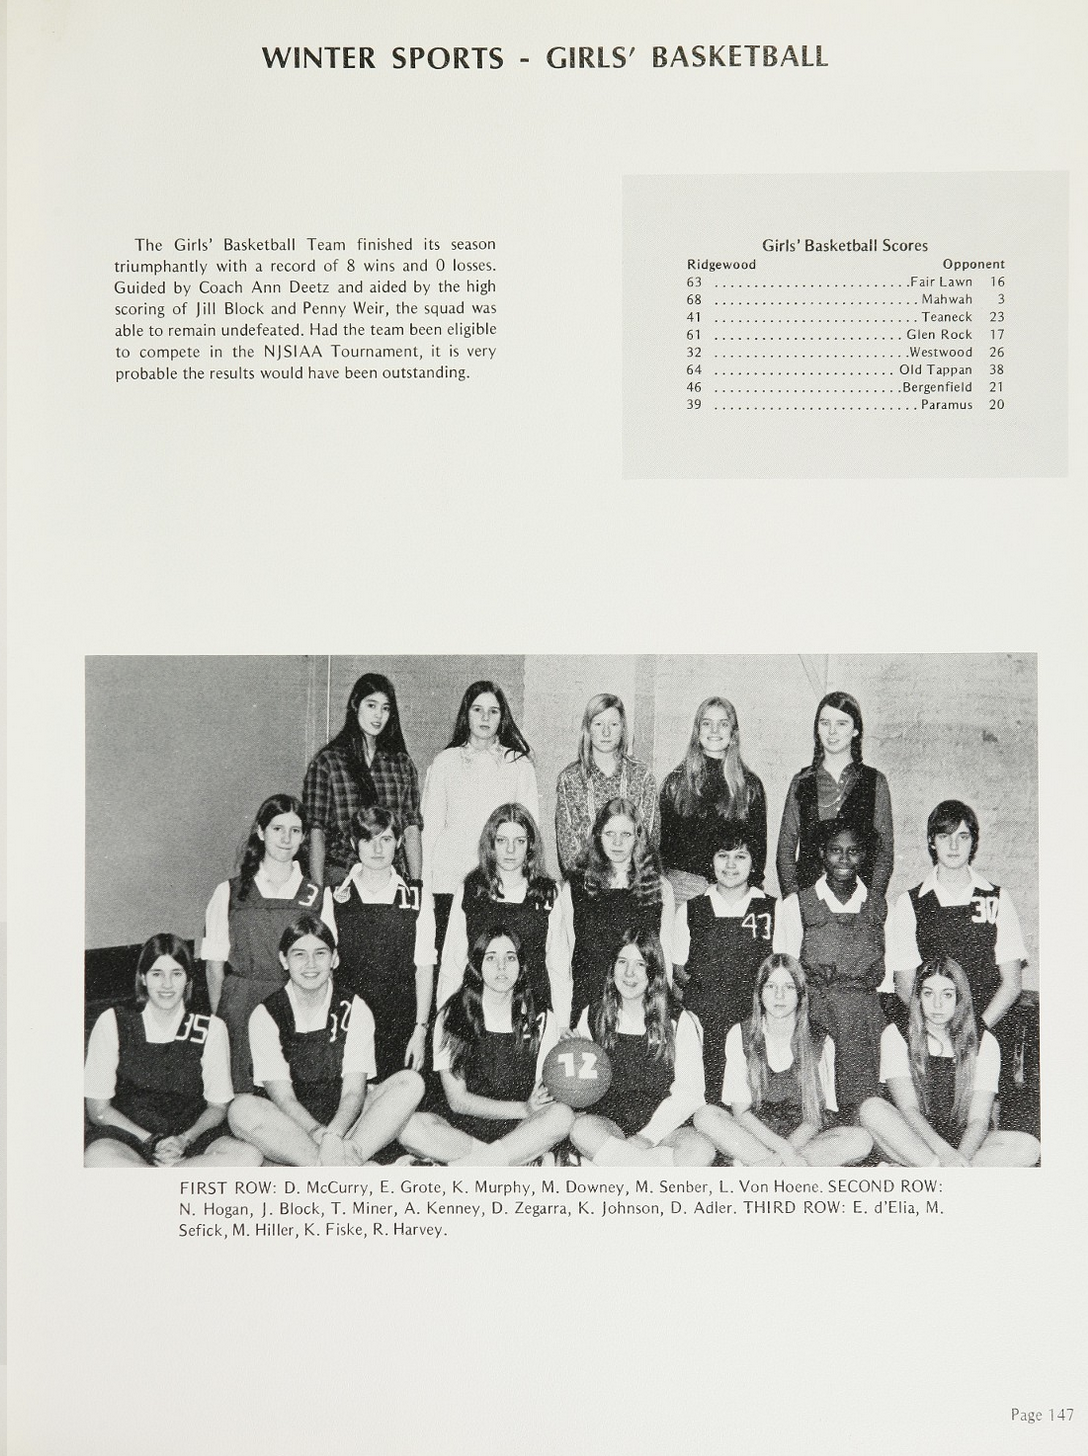 1972 Girls’ Basketball Team